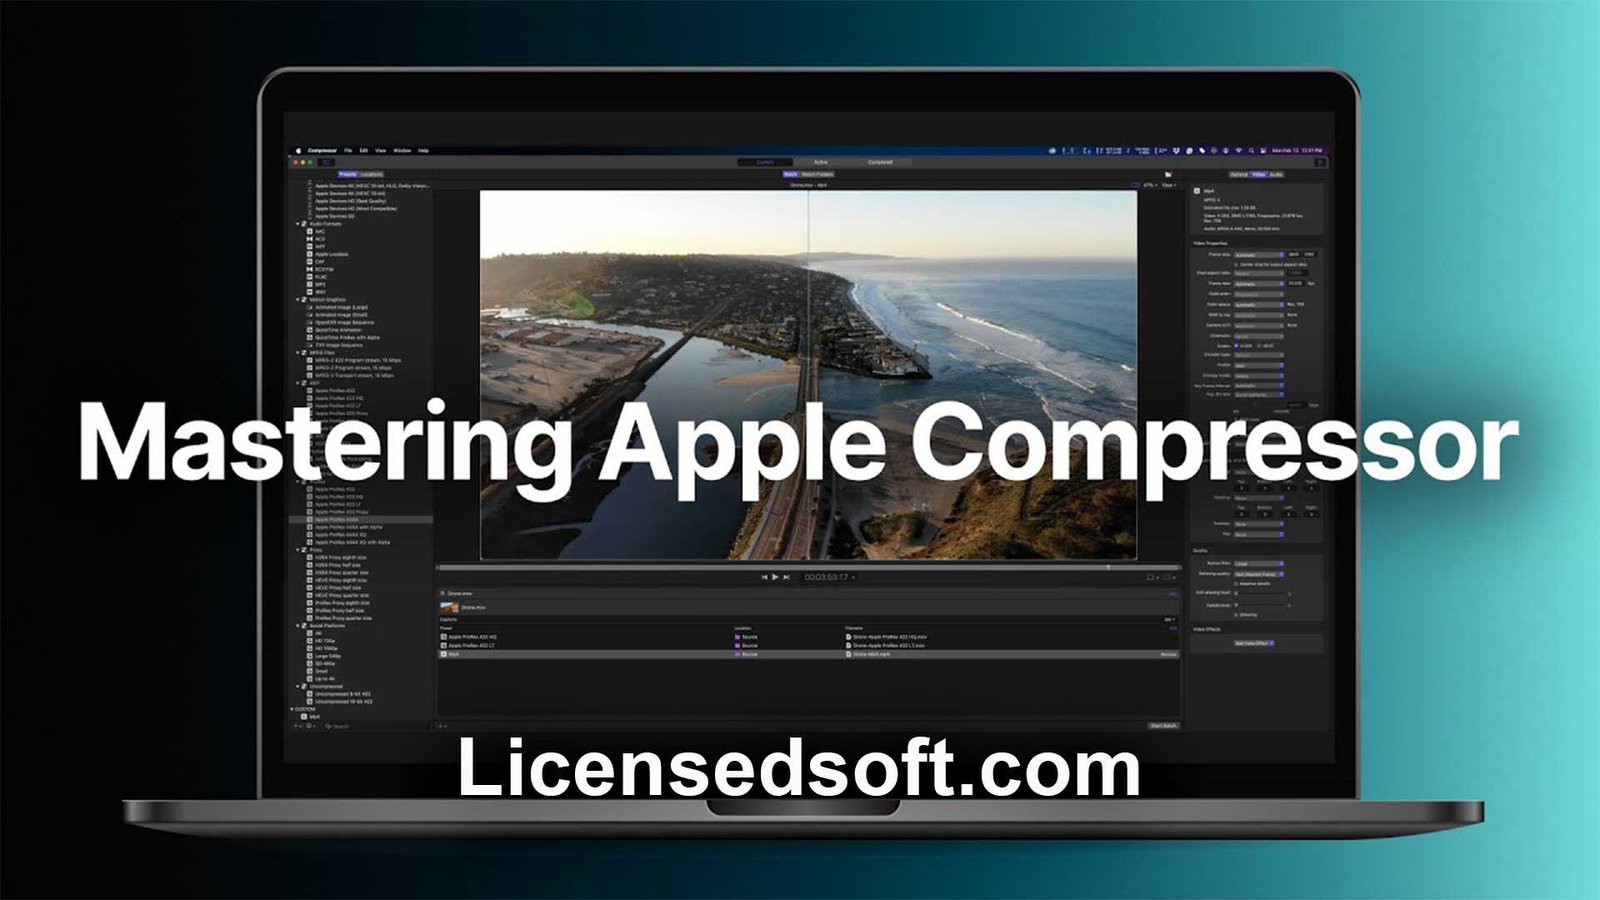 Apple-Compressor-4.7.0-For-MacOS-Lifetime-Premium-cover-photo-by-licensedsoft.